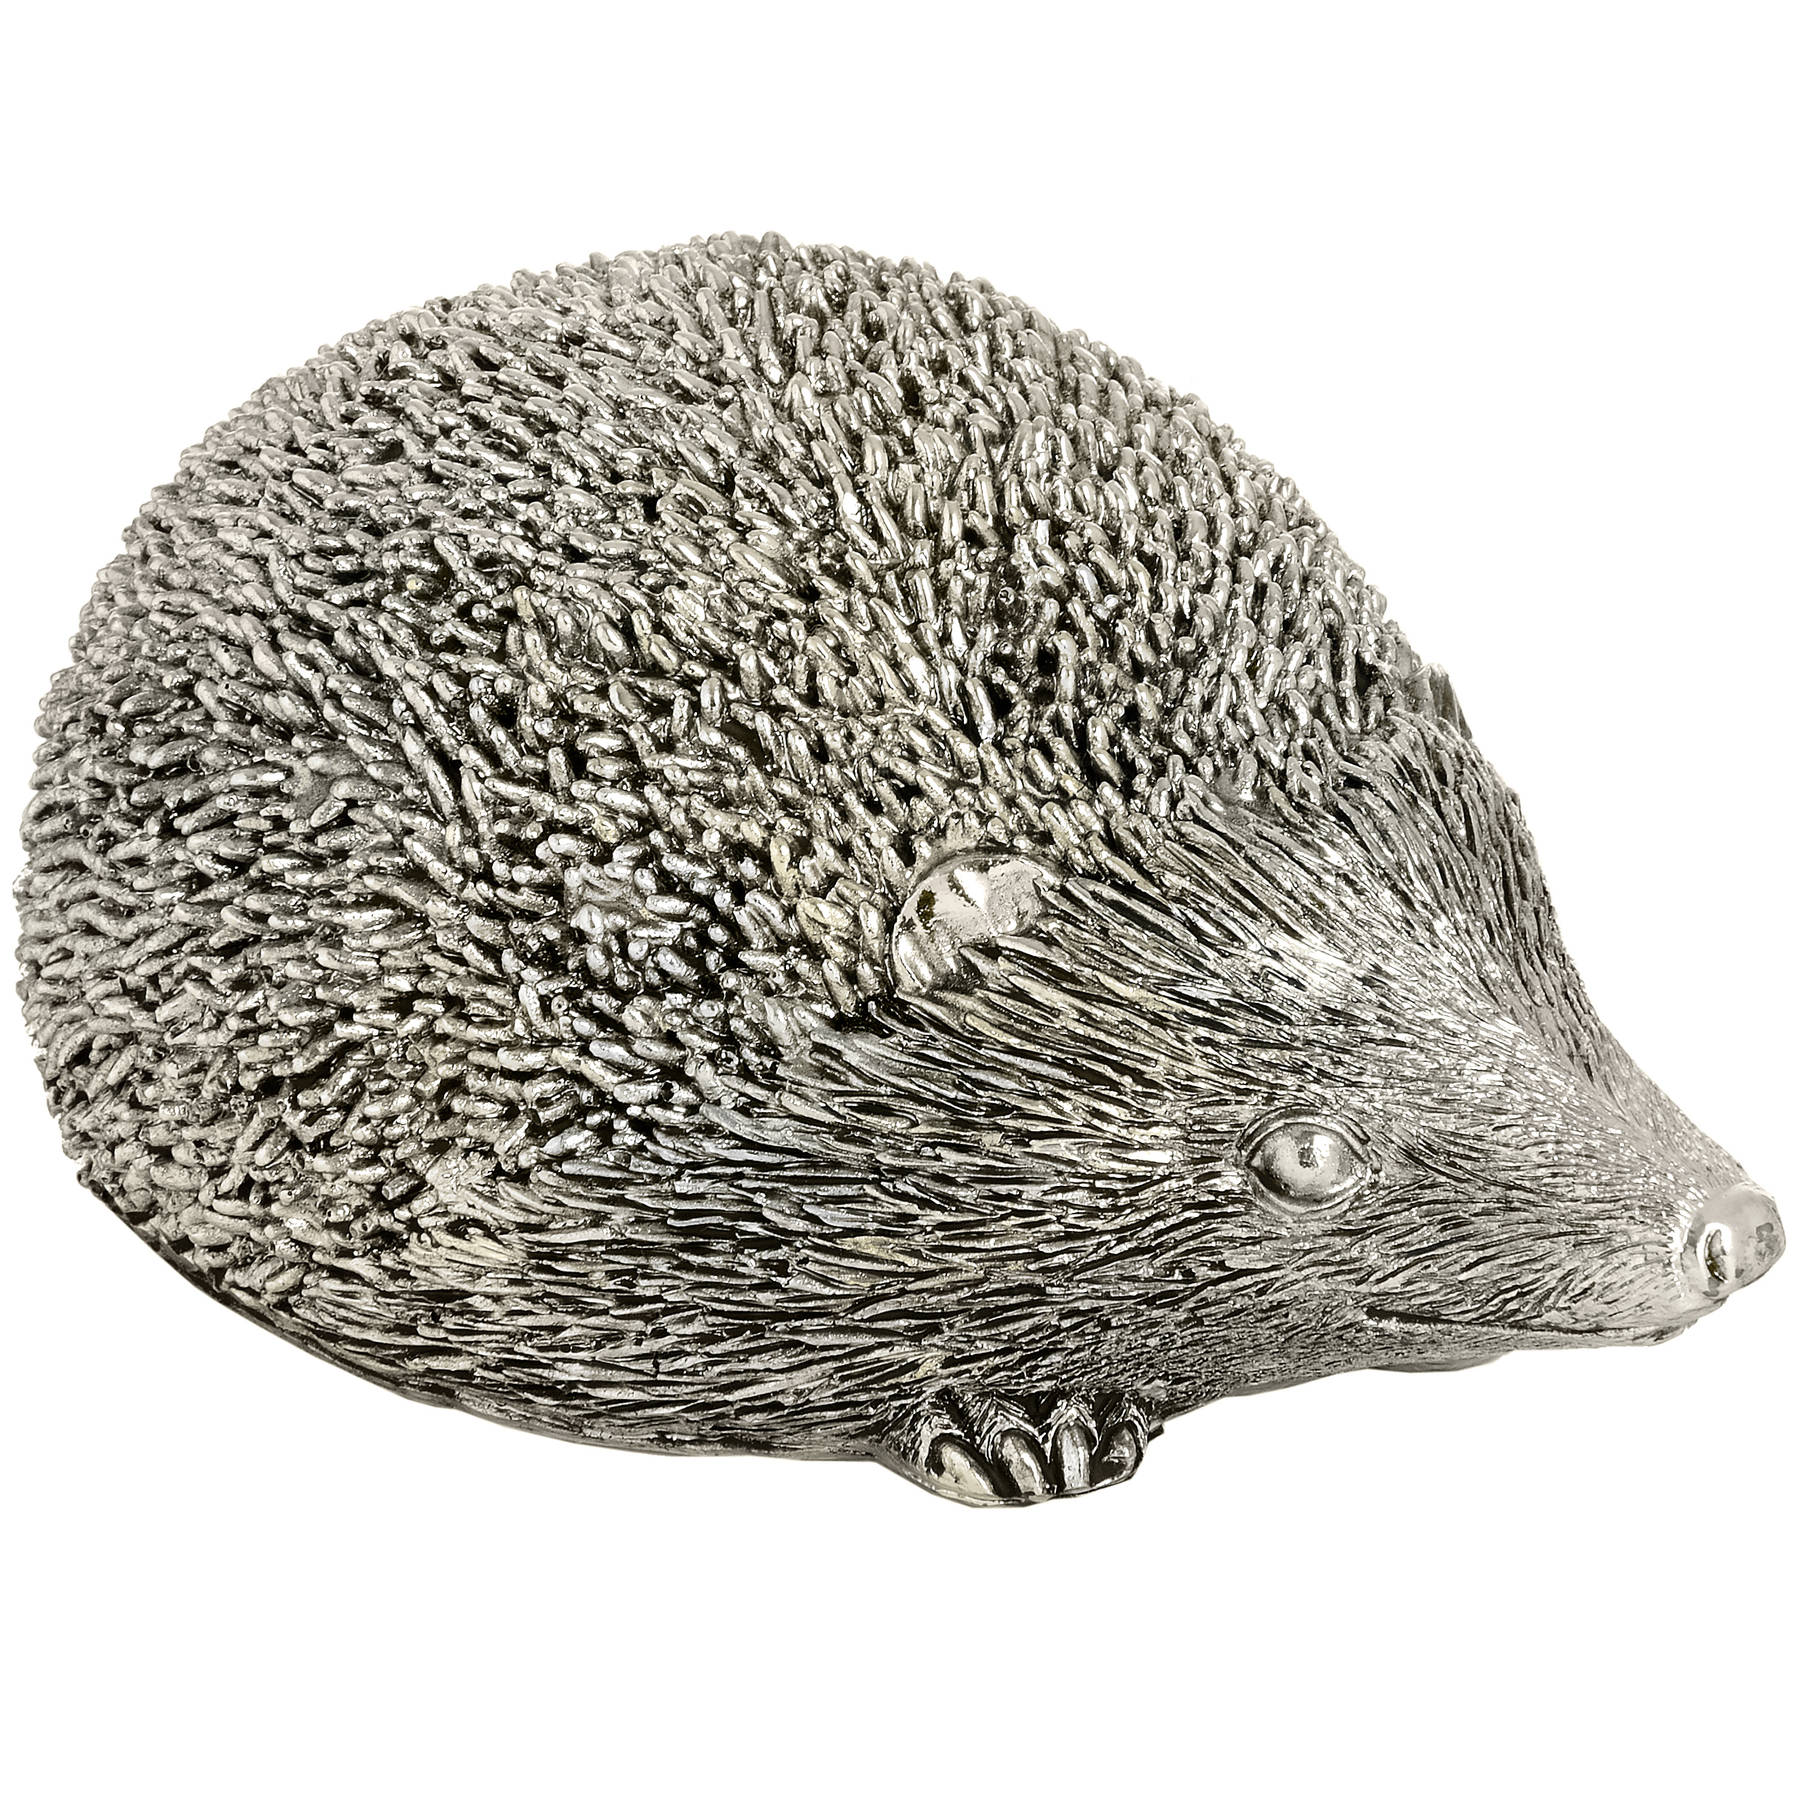 Henrietta The Silver Hedgehog - Image 1